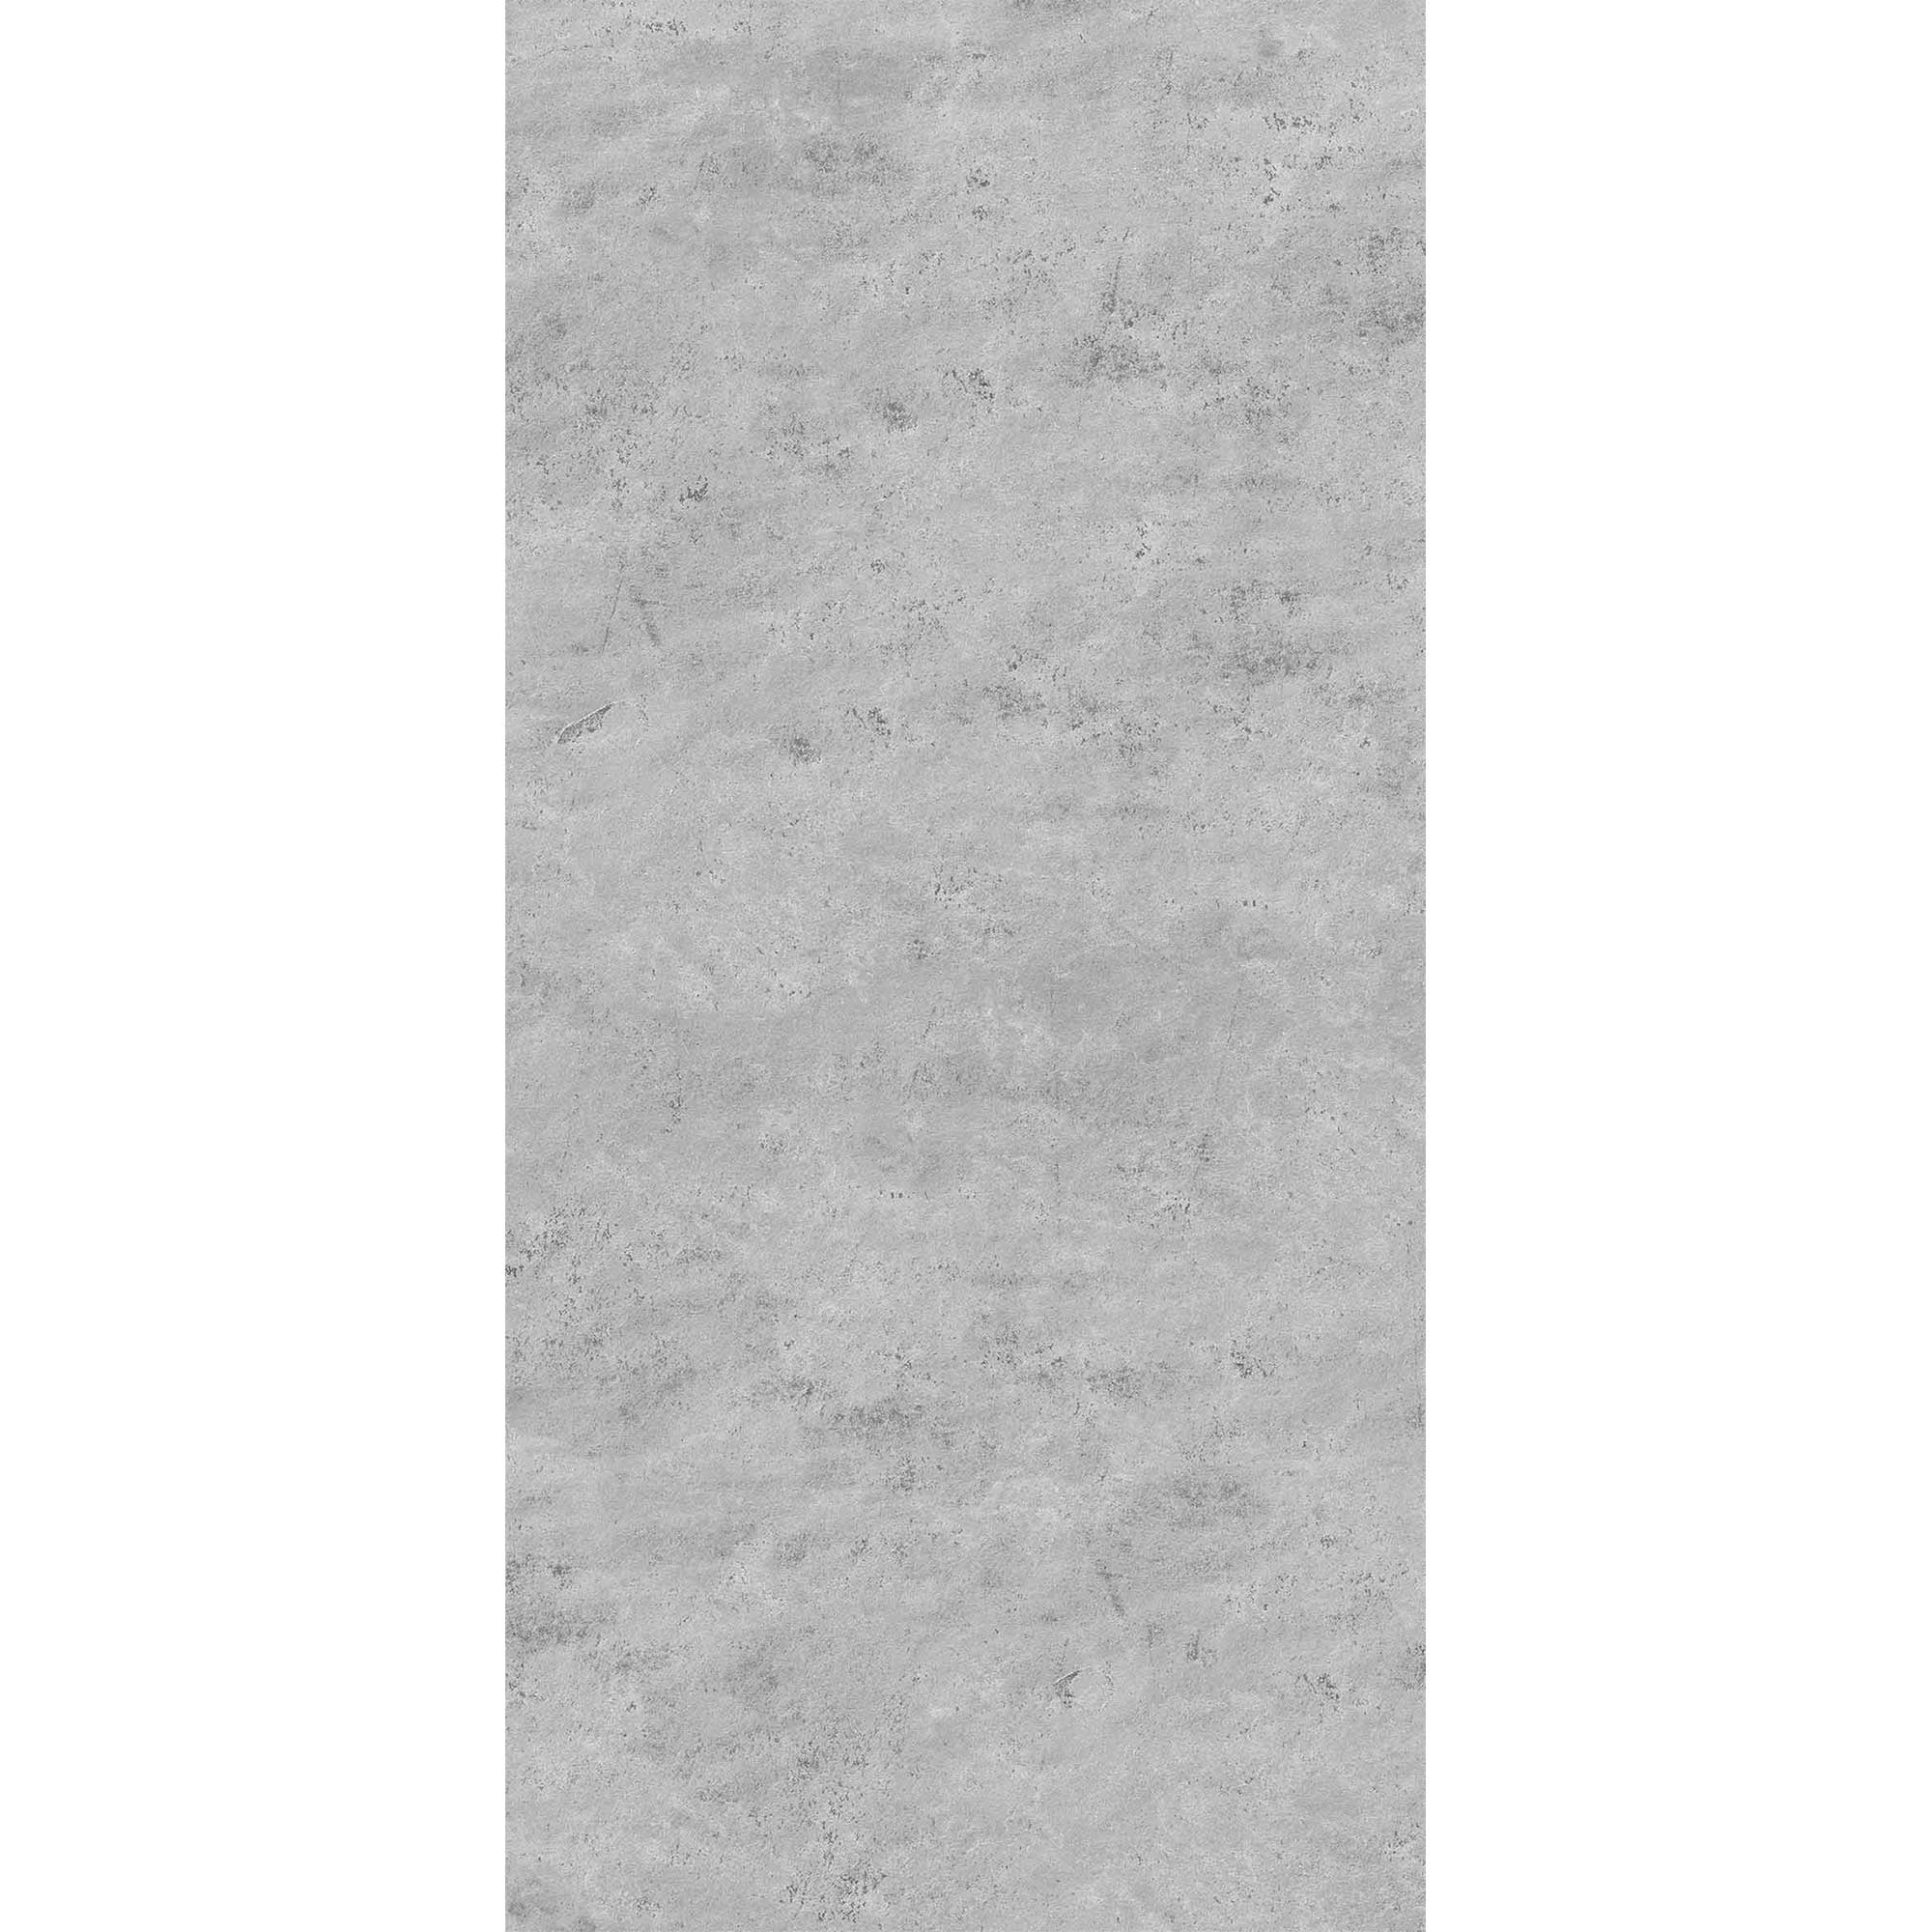 Duschrückwand Softtouch Marmoroptik grau 150 x 255 cm + product picture